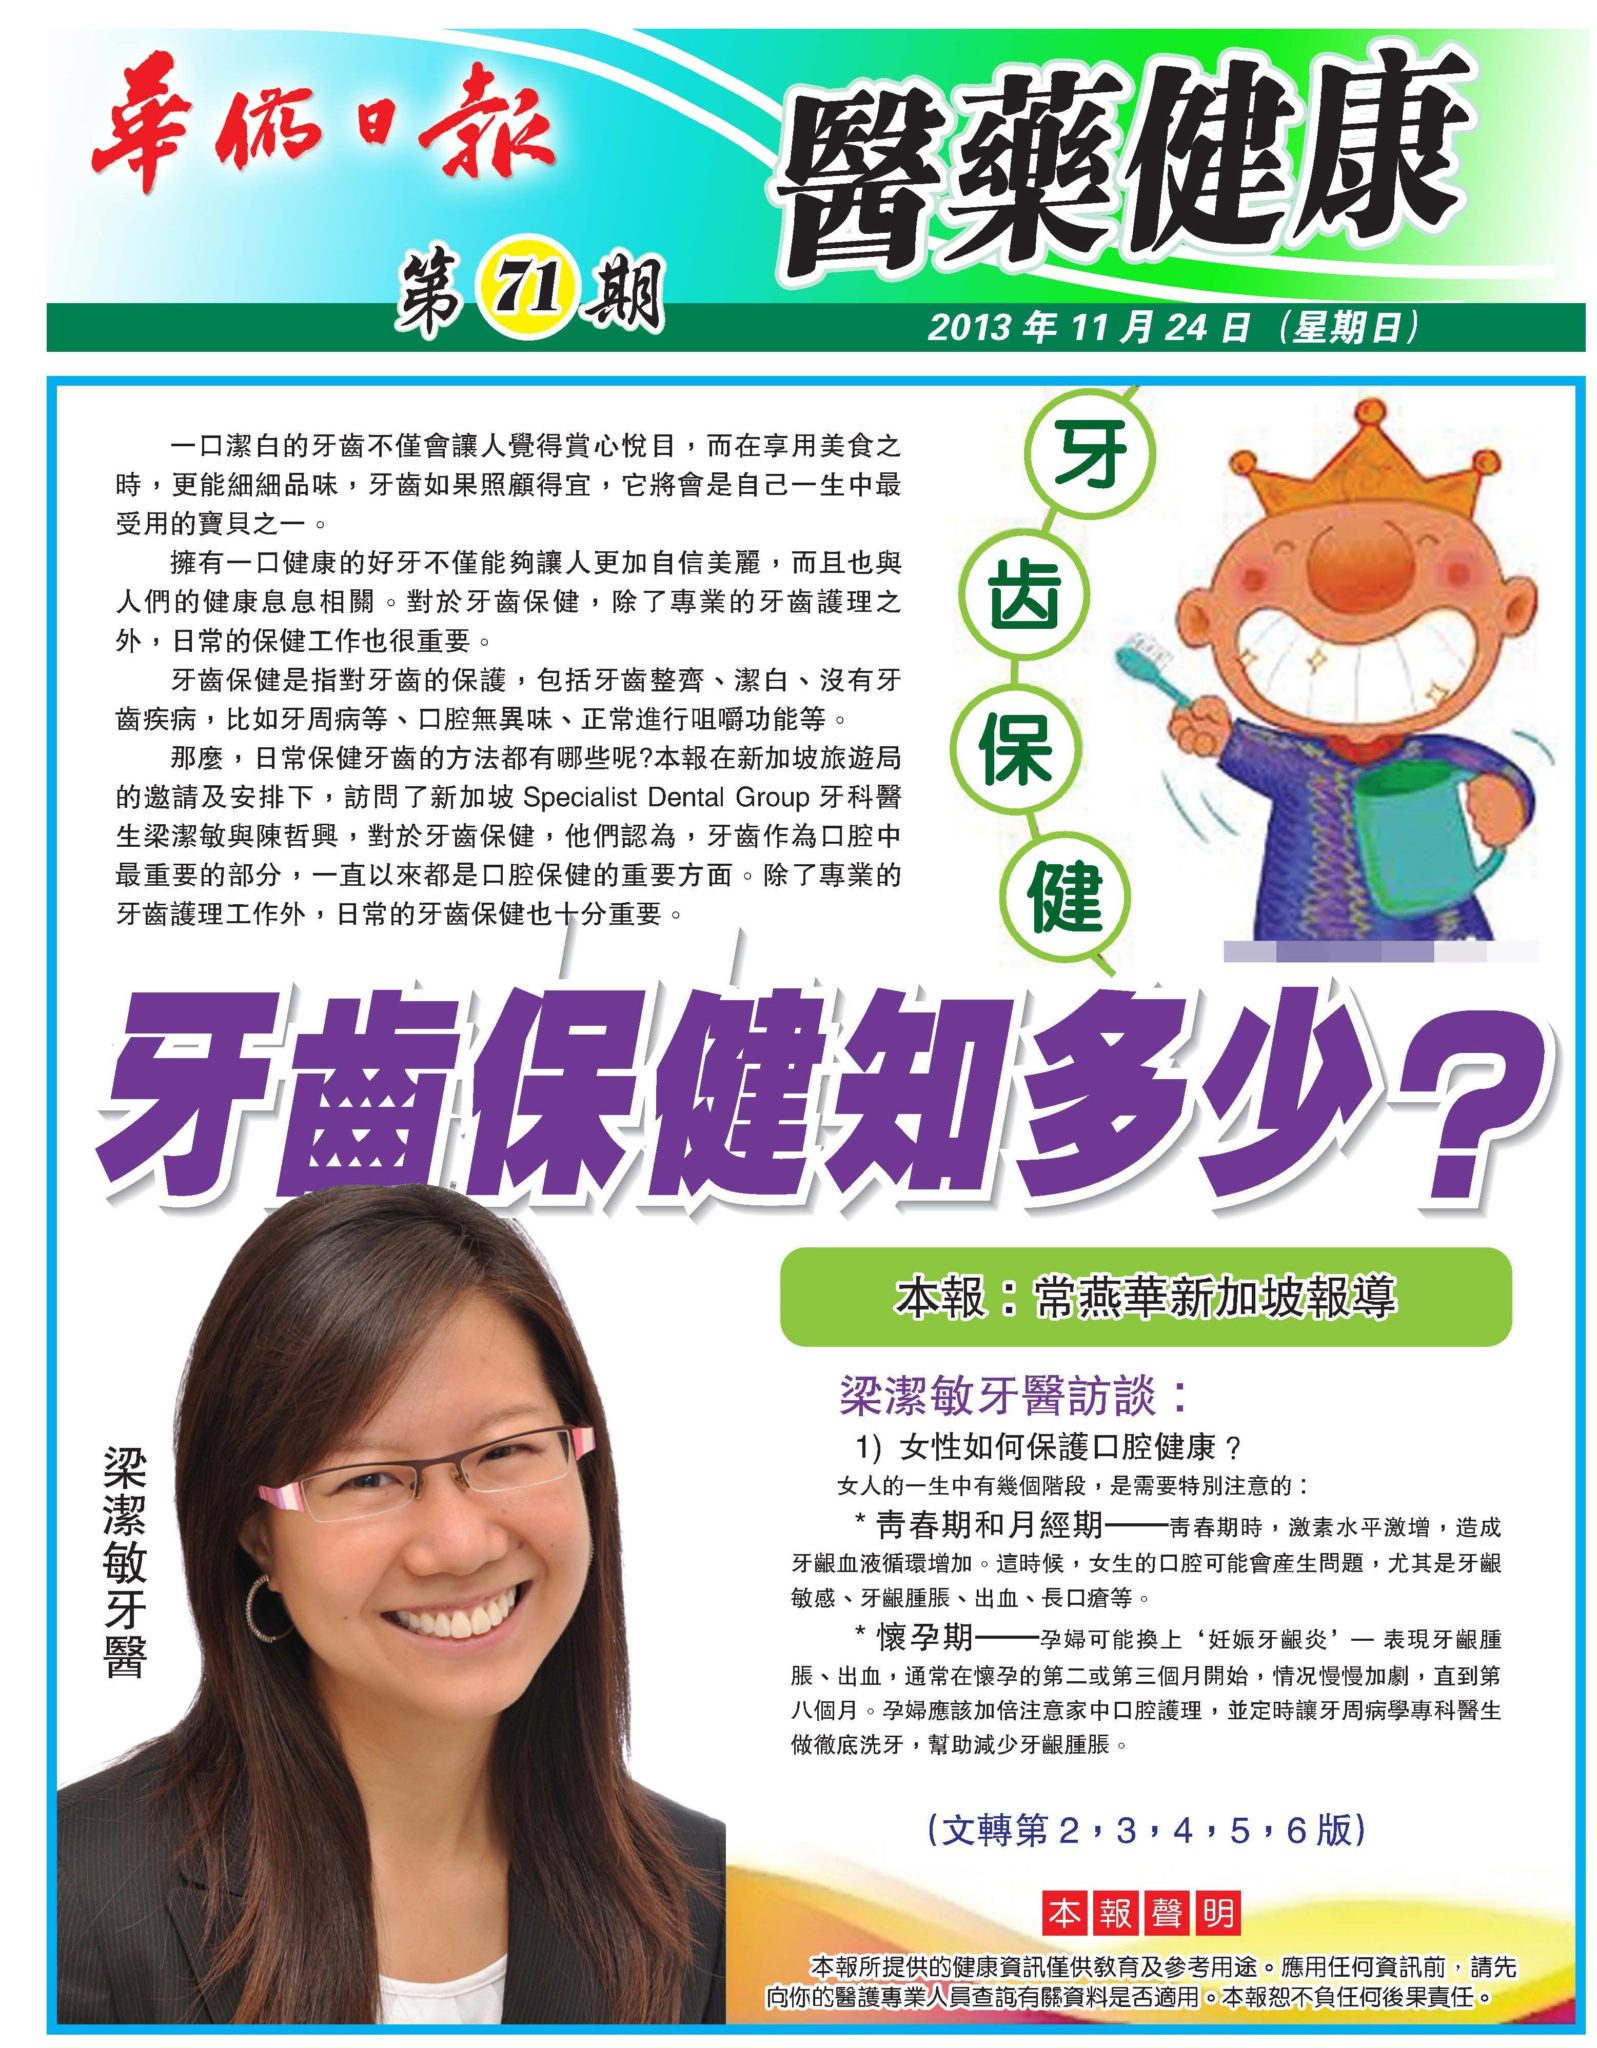 Overseas Chinese Daily News, November 2013: “牙齿保健知多少?”